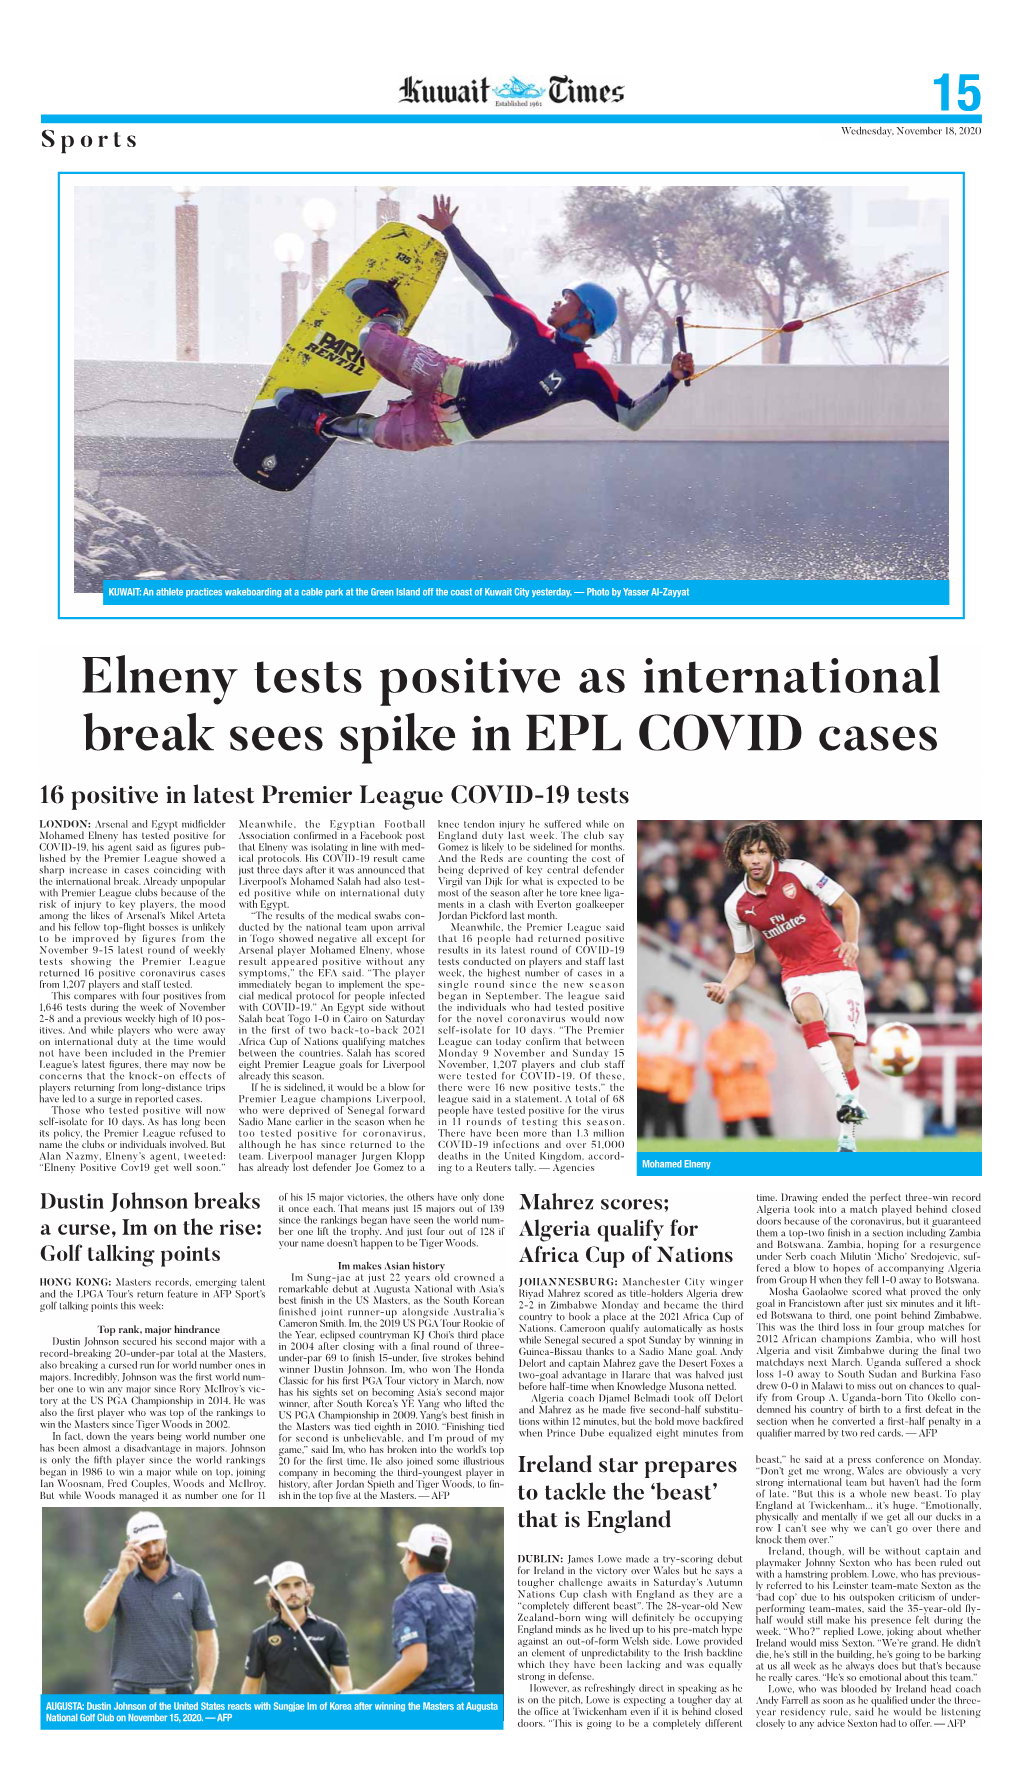 Elneny Tests Positive As International Break Sees Spike in EPL COVID Cases